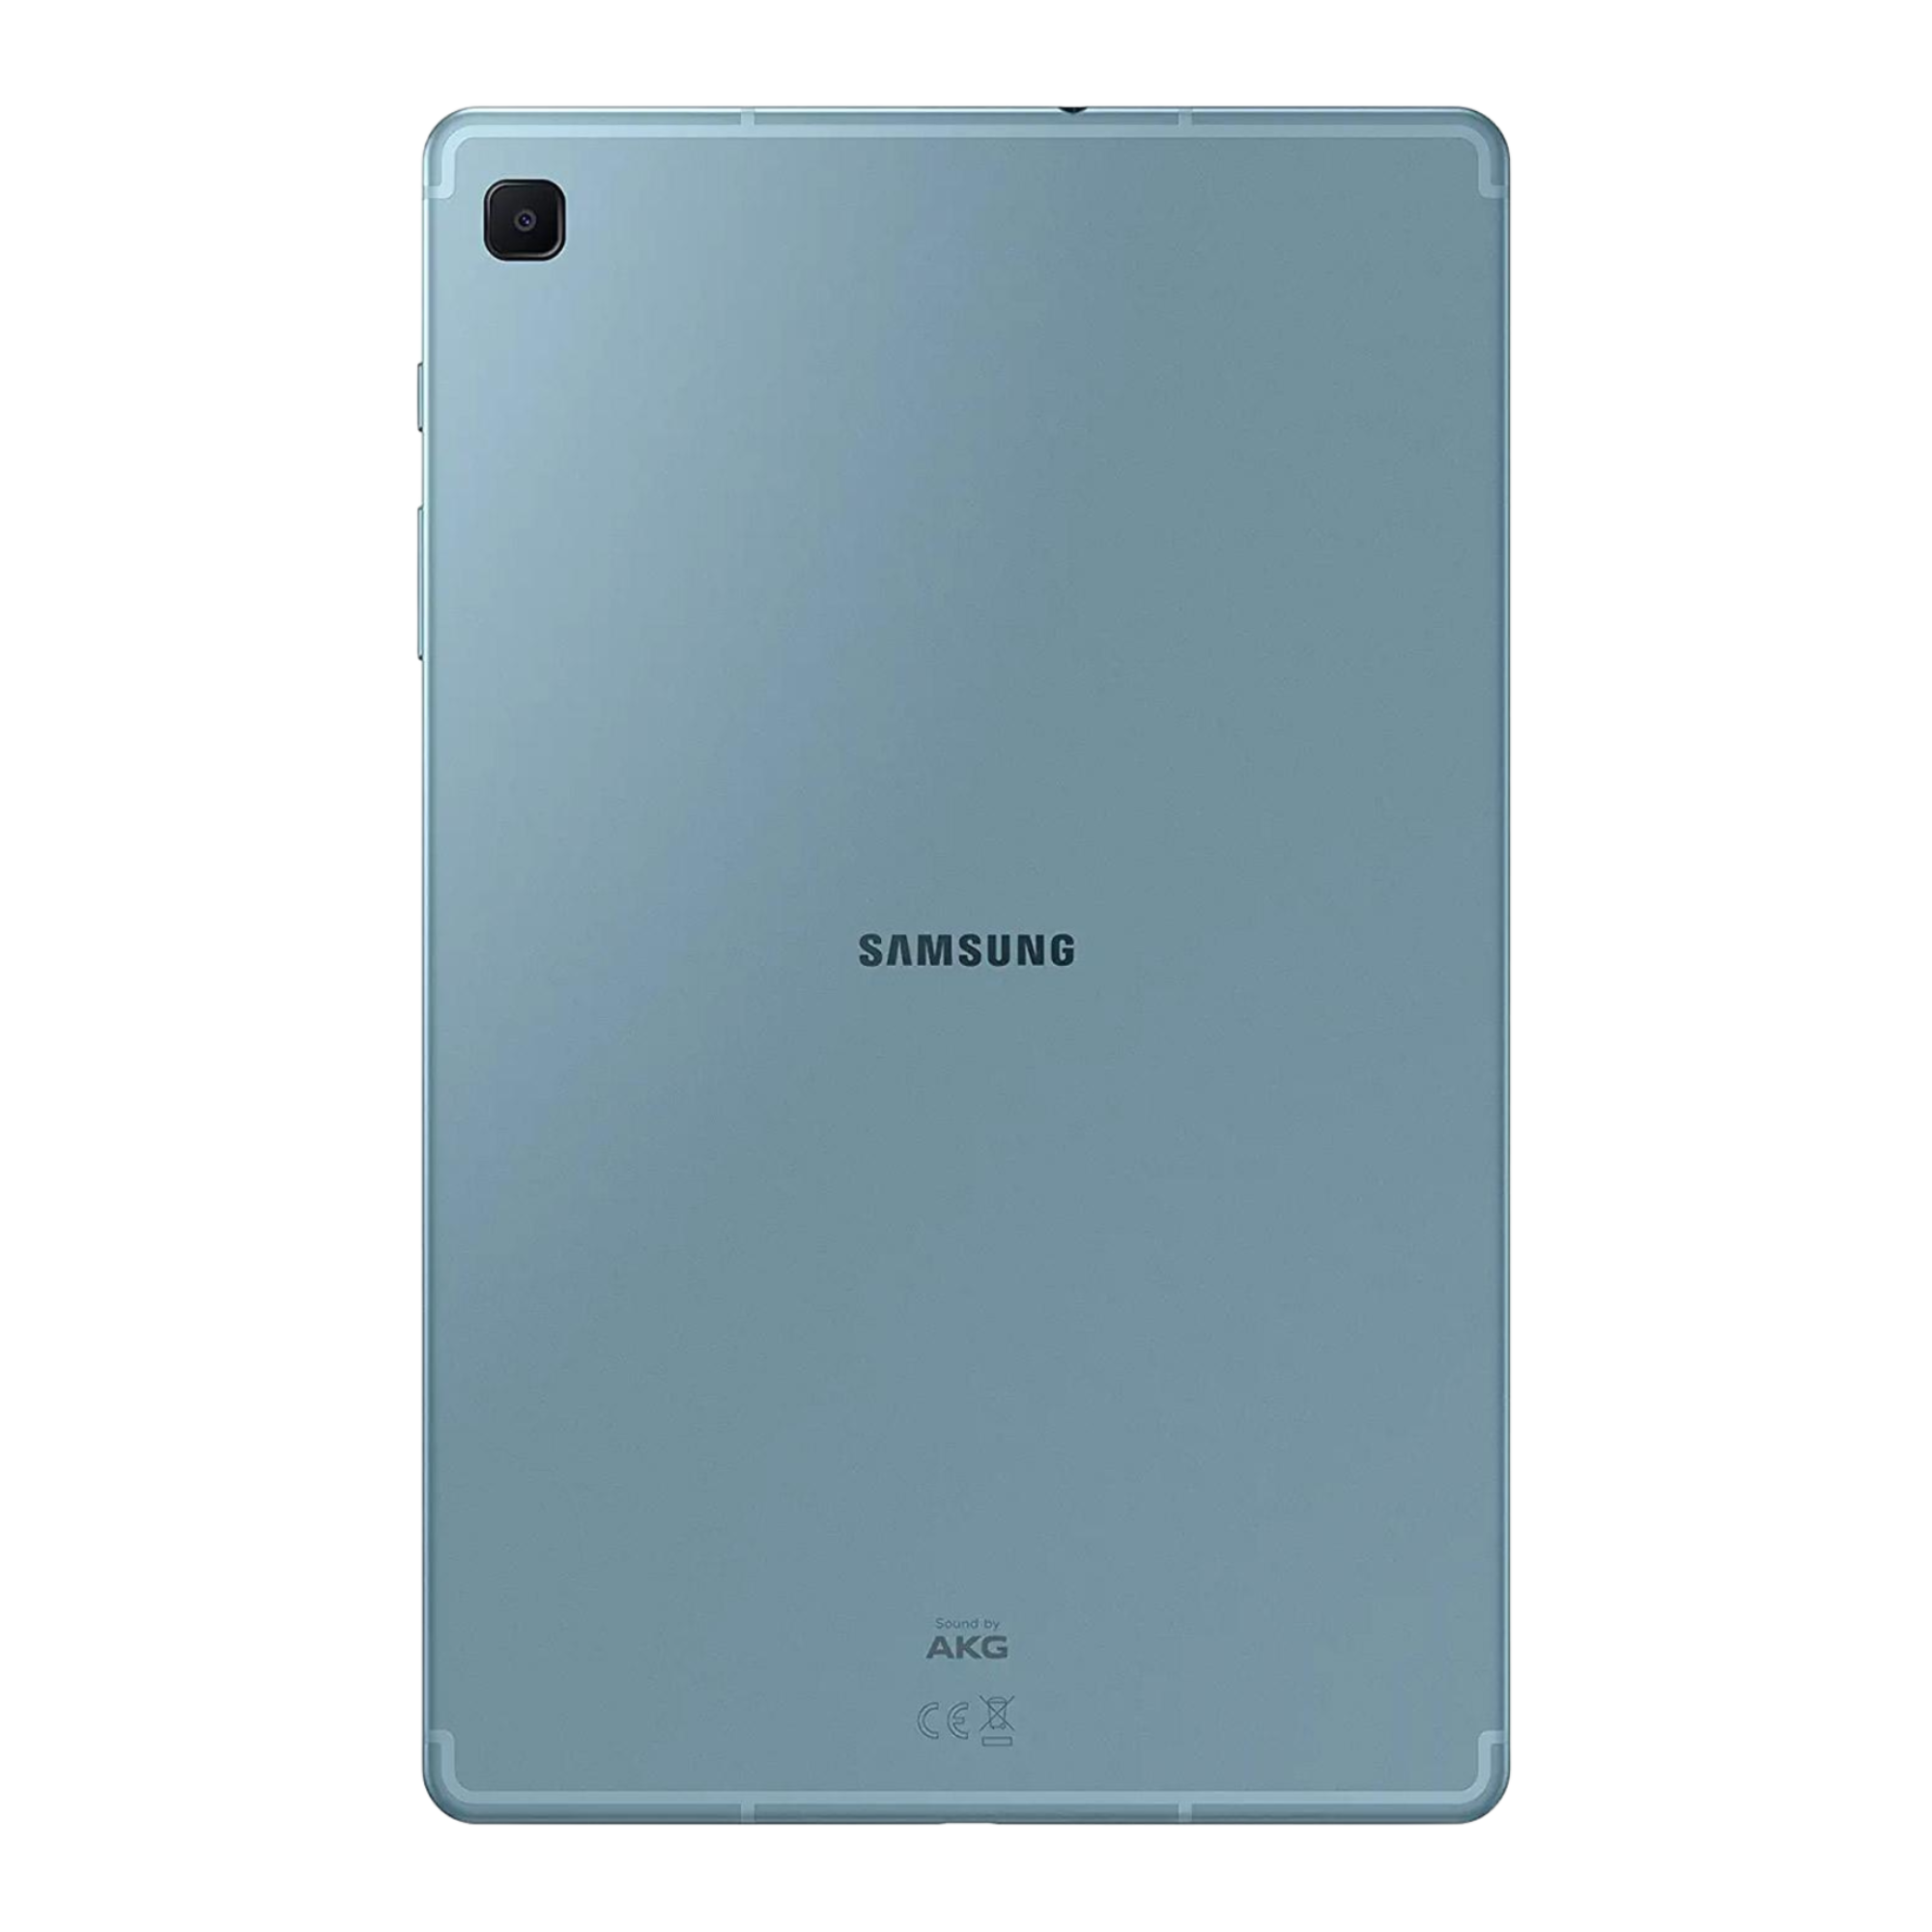 Samsung Galaxy Tab S6 Lite LTE 4GB RAM, 64GB - Grey - TVs, Smartphones